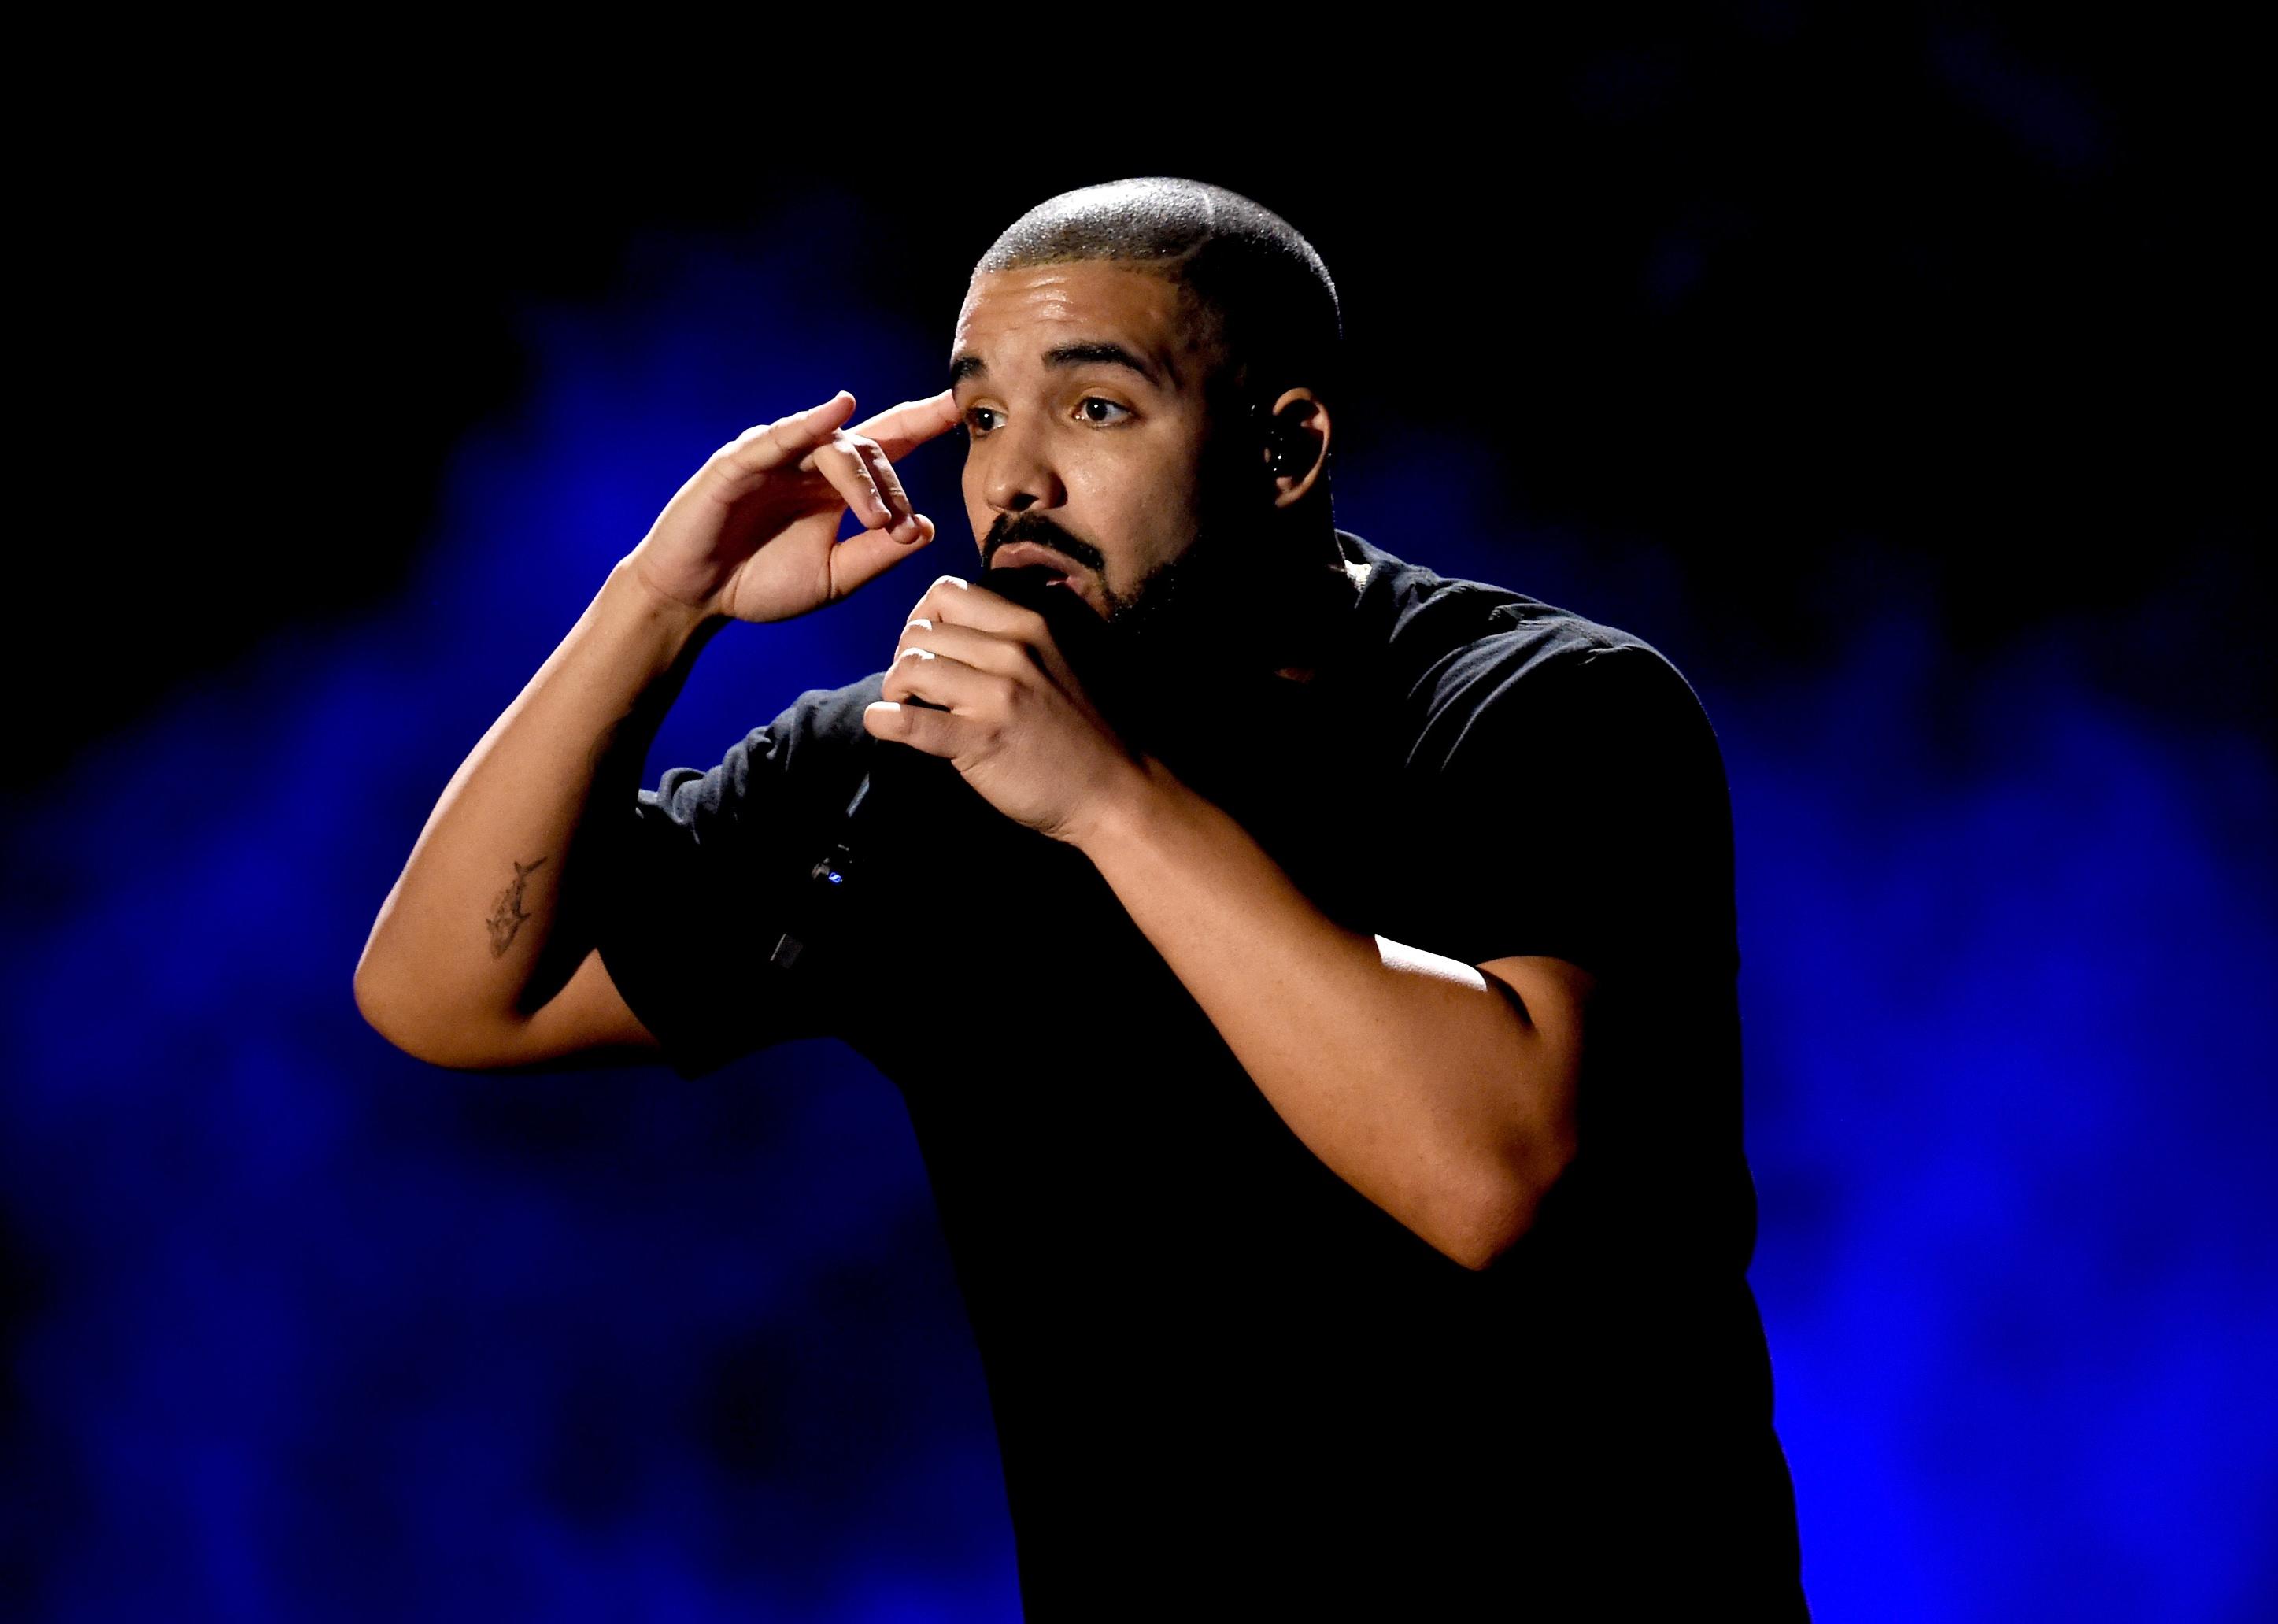 Drake onstage against a blue backlight.